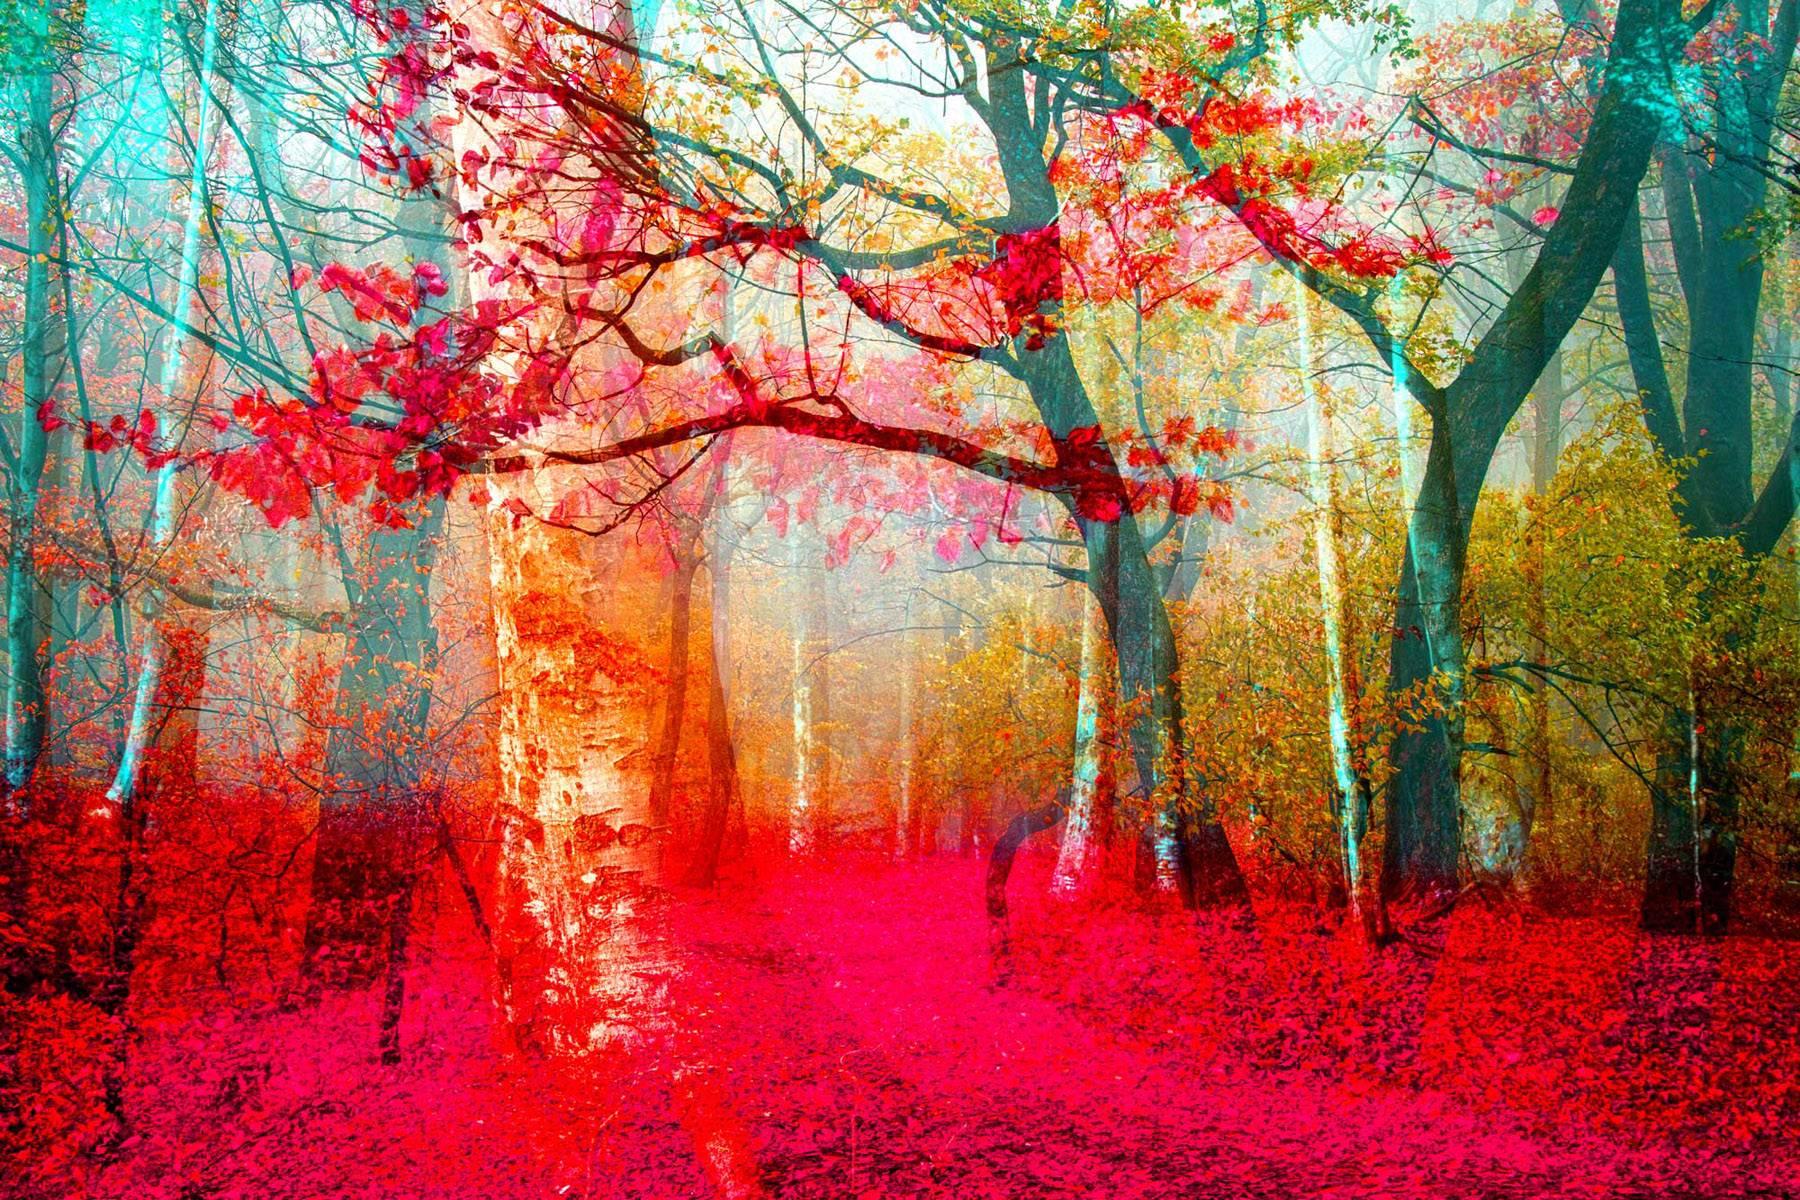 Thomas Bijen Landscape Photograph - Pink Forest - Framed Fine Art Limited Edition of 149